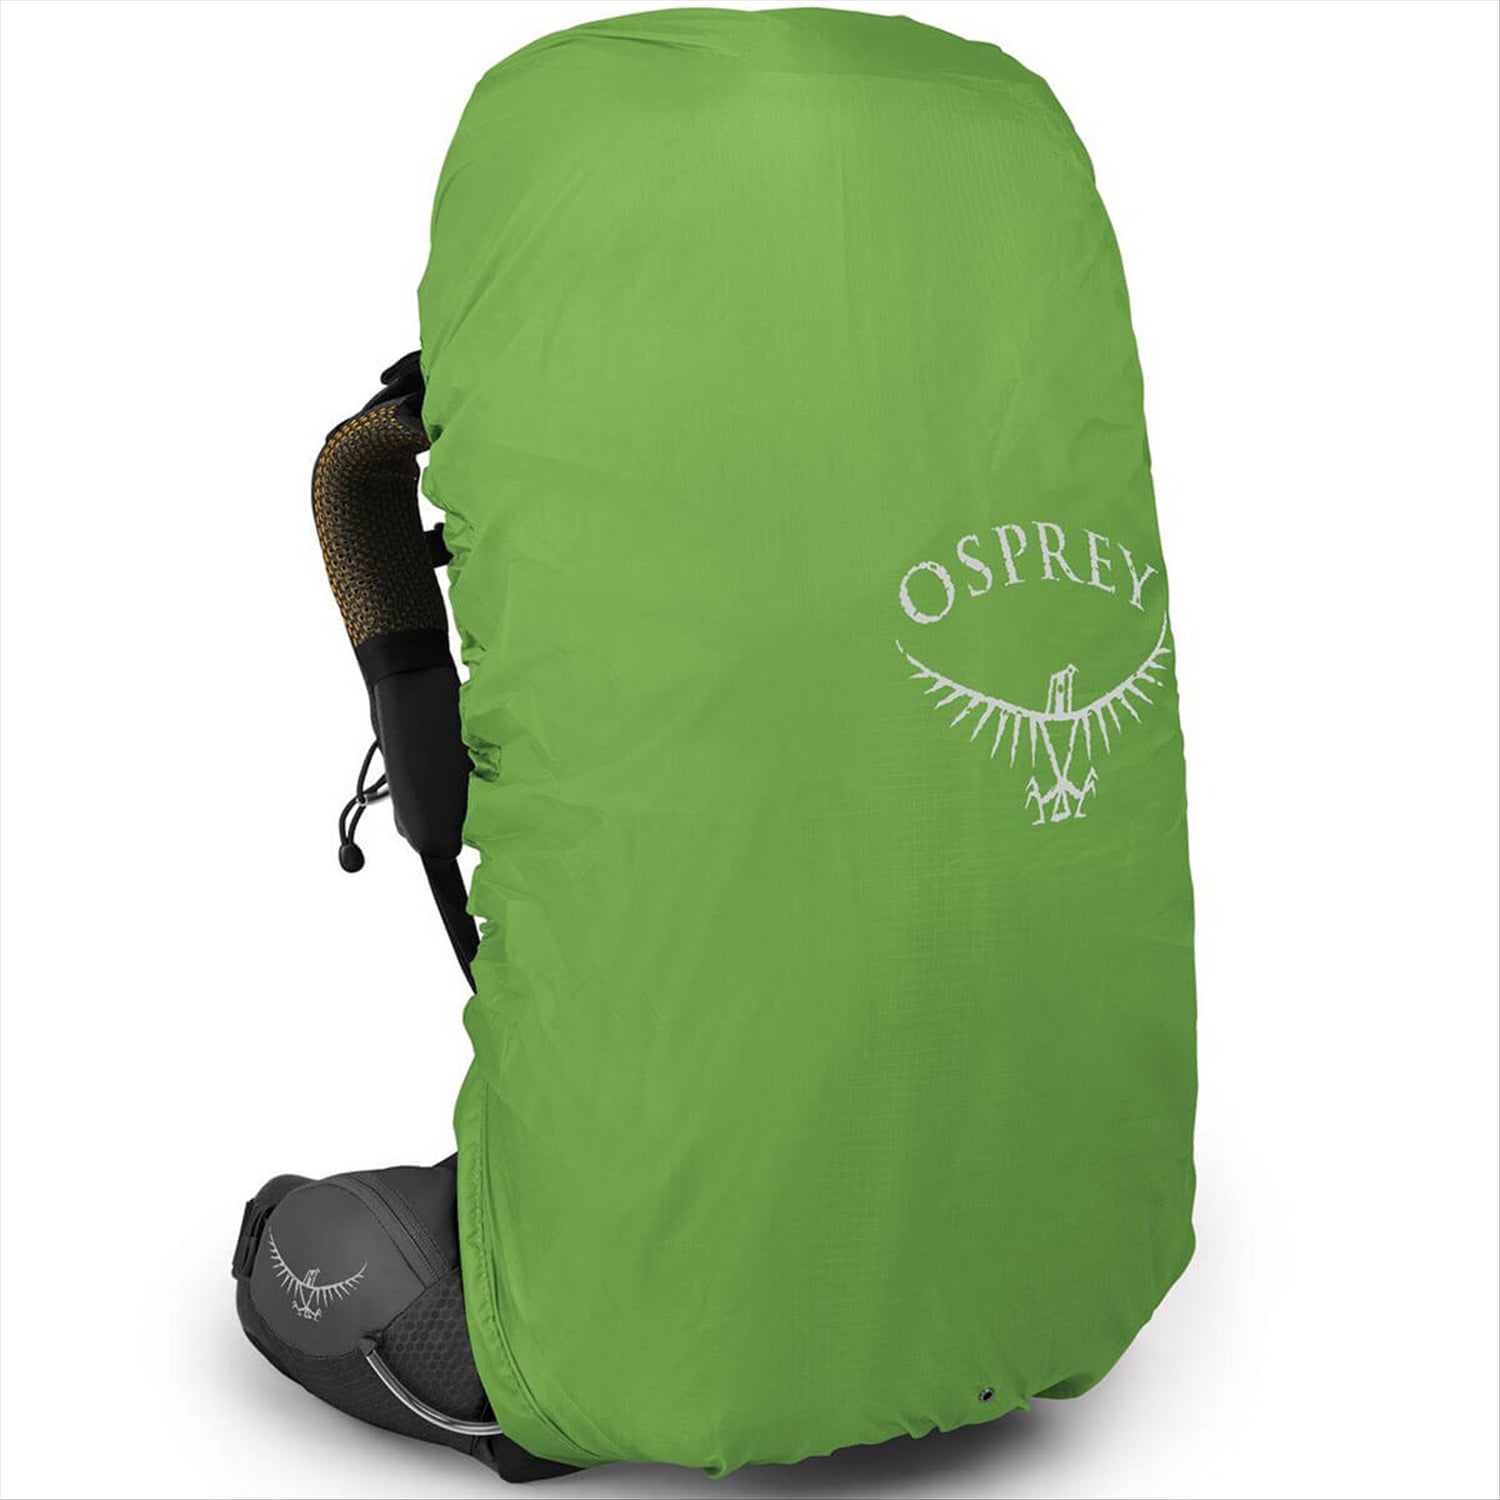 Osprey Osprey Atmos 50 Backpack